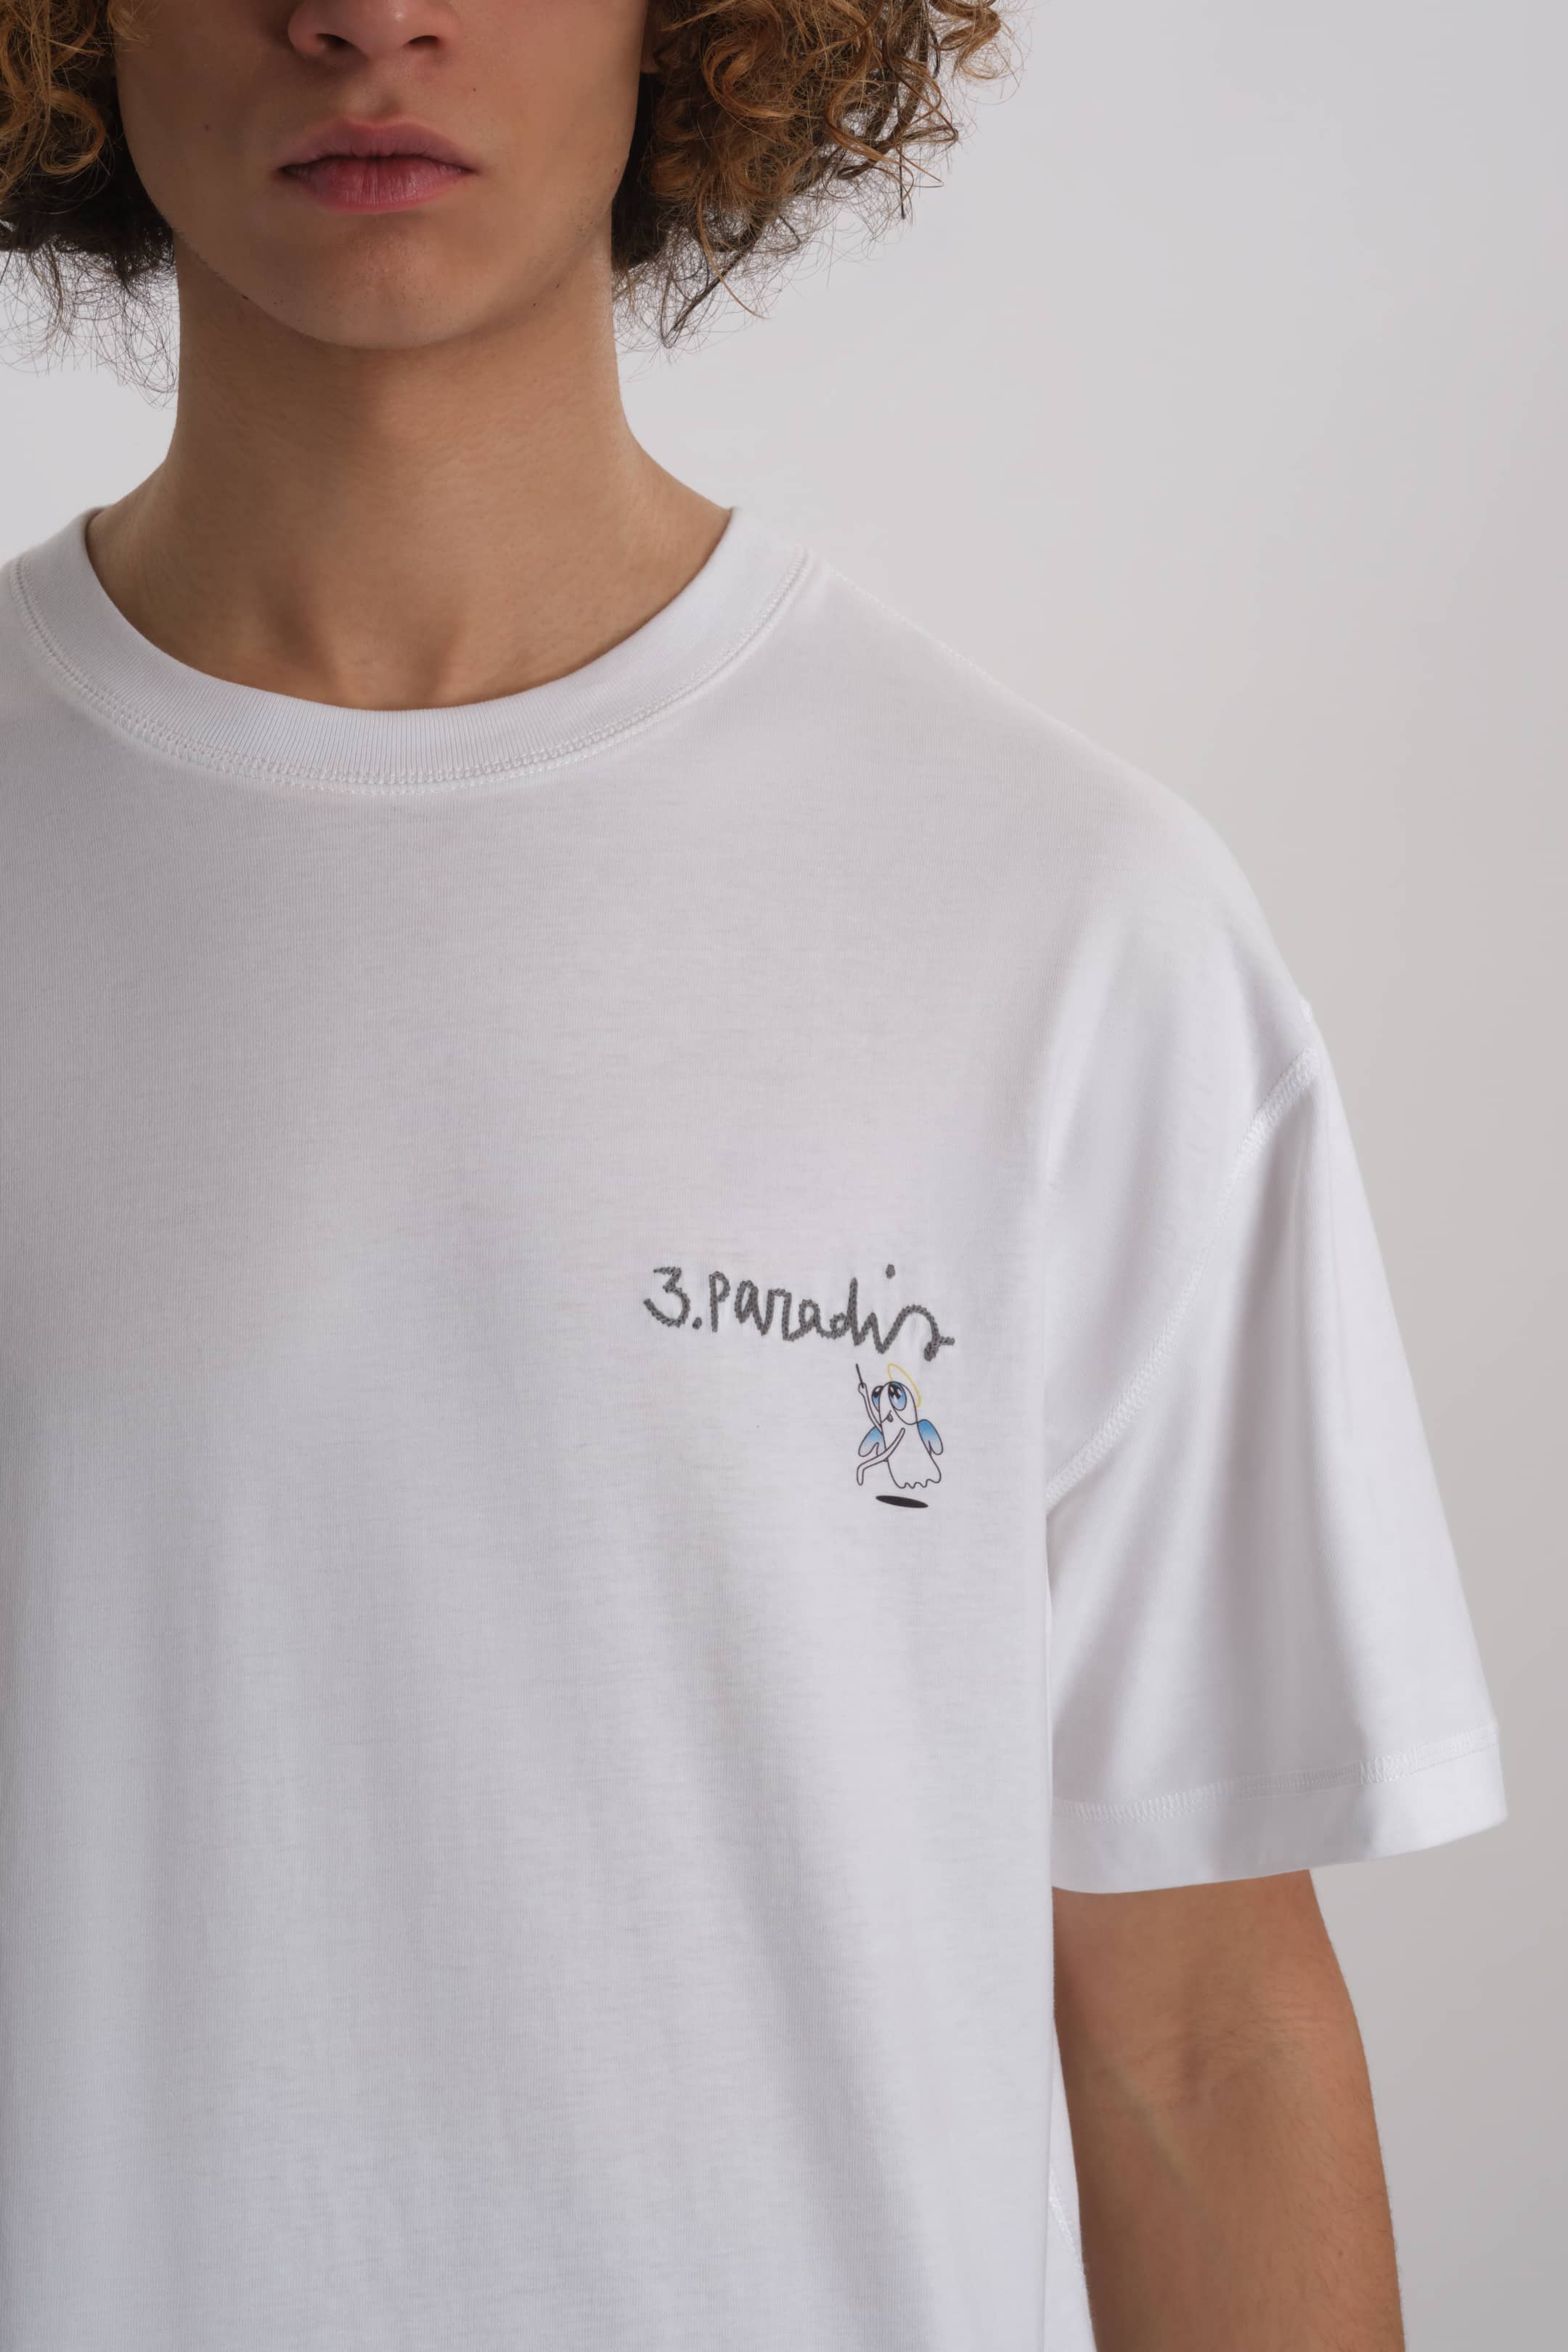 3.PARADIS & Edgar Plans : Small Logo T-Shirt